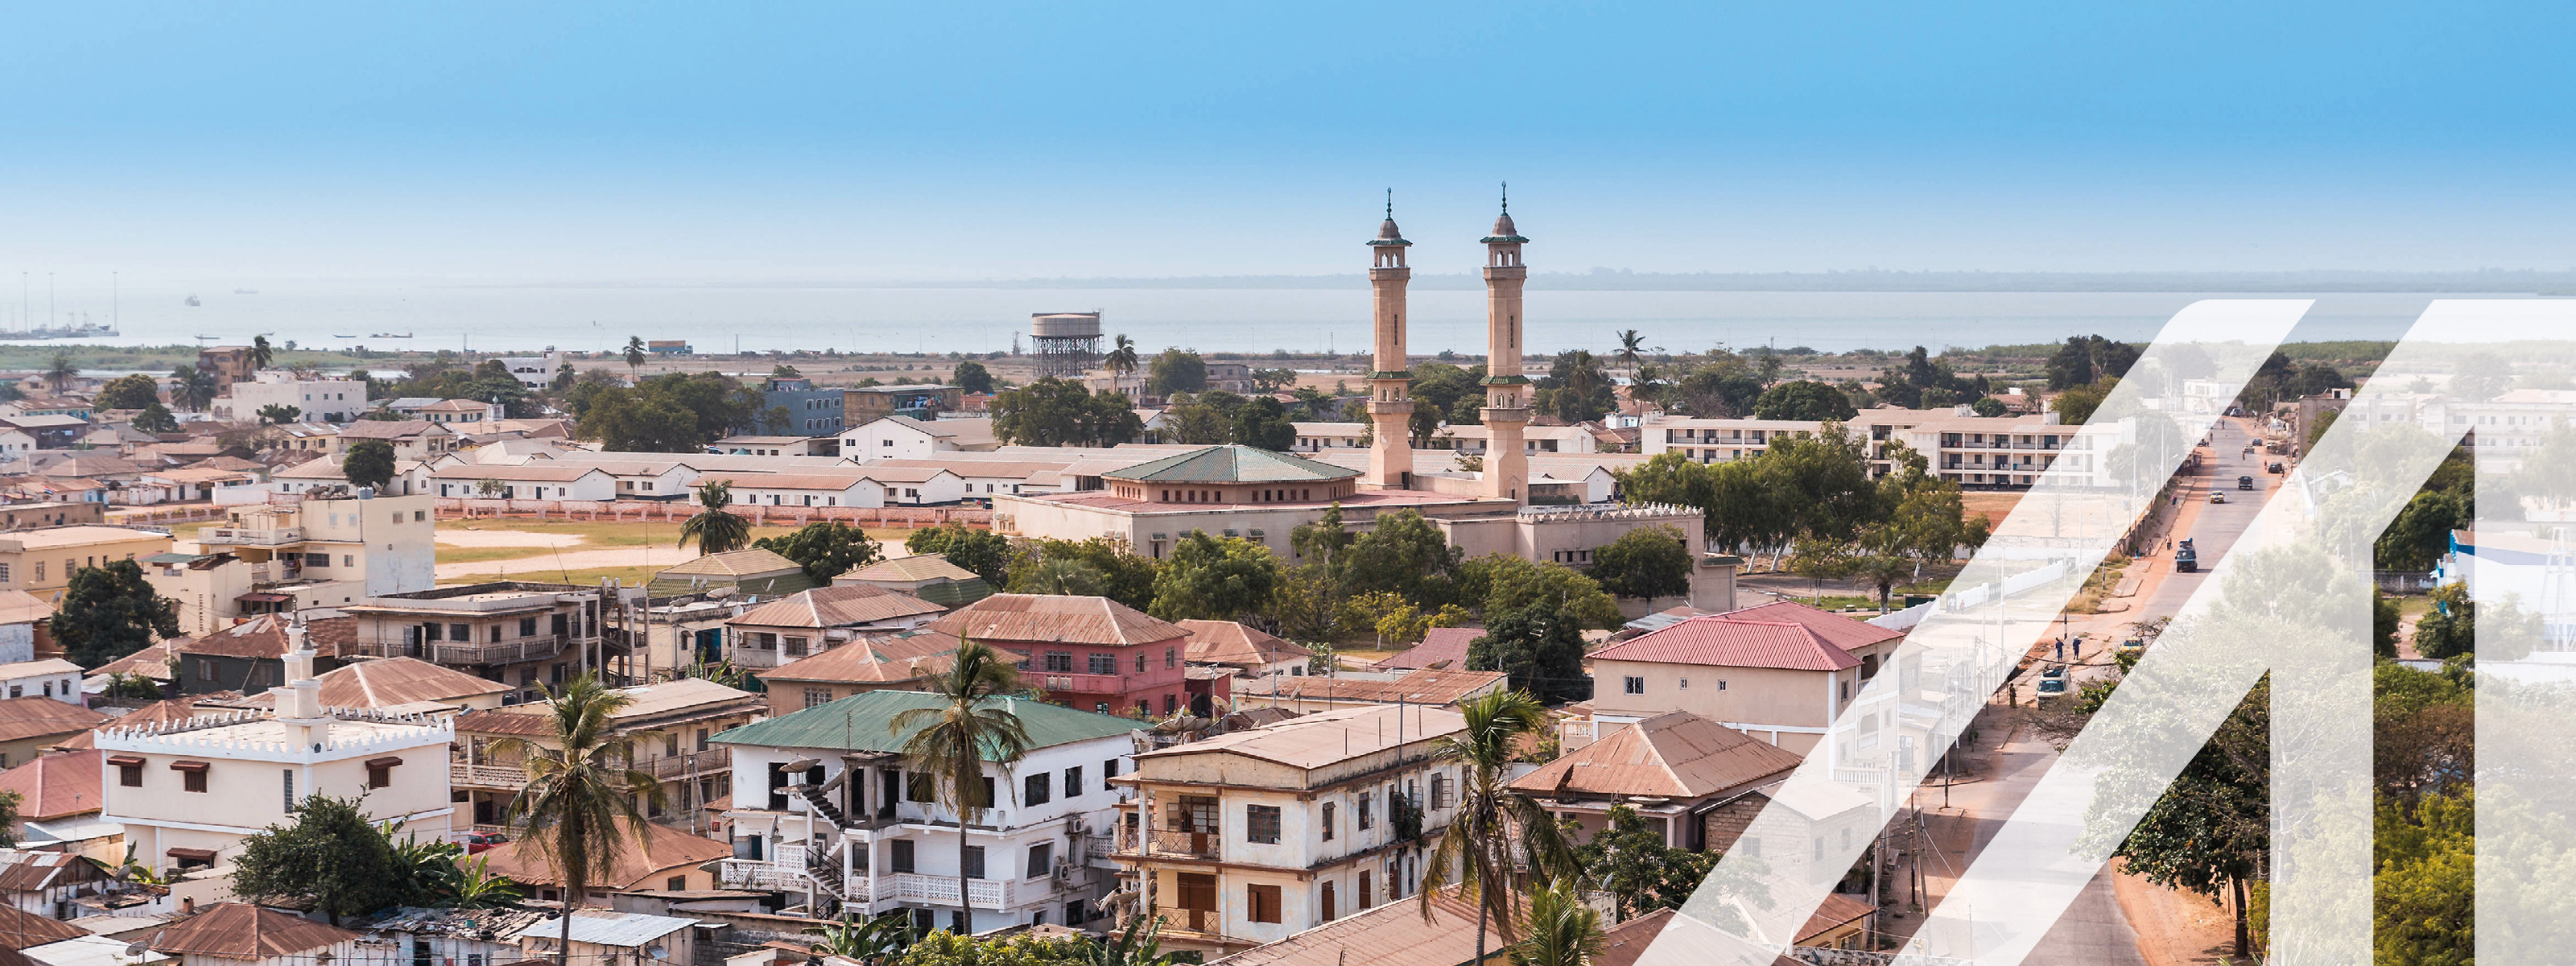 Panoramablick auf Banjul, Hauptstadt von Gambia